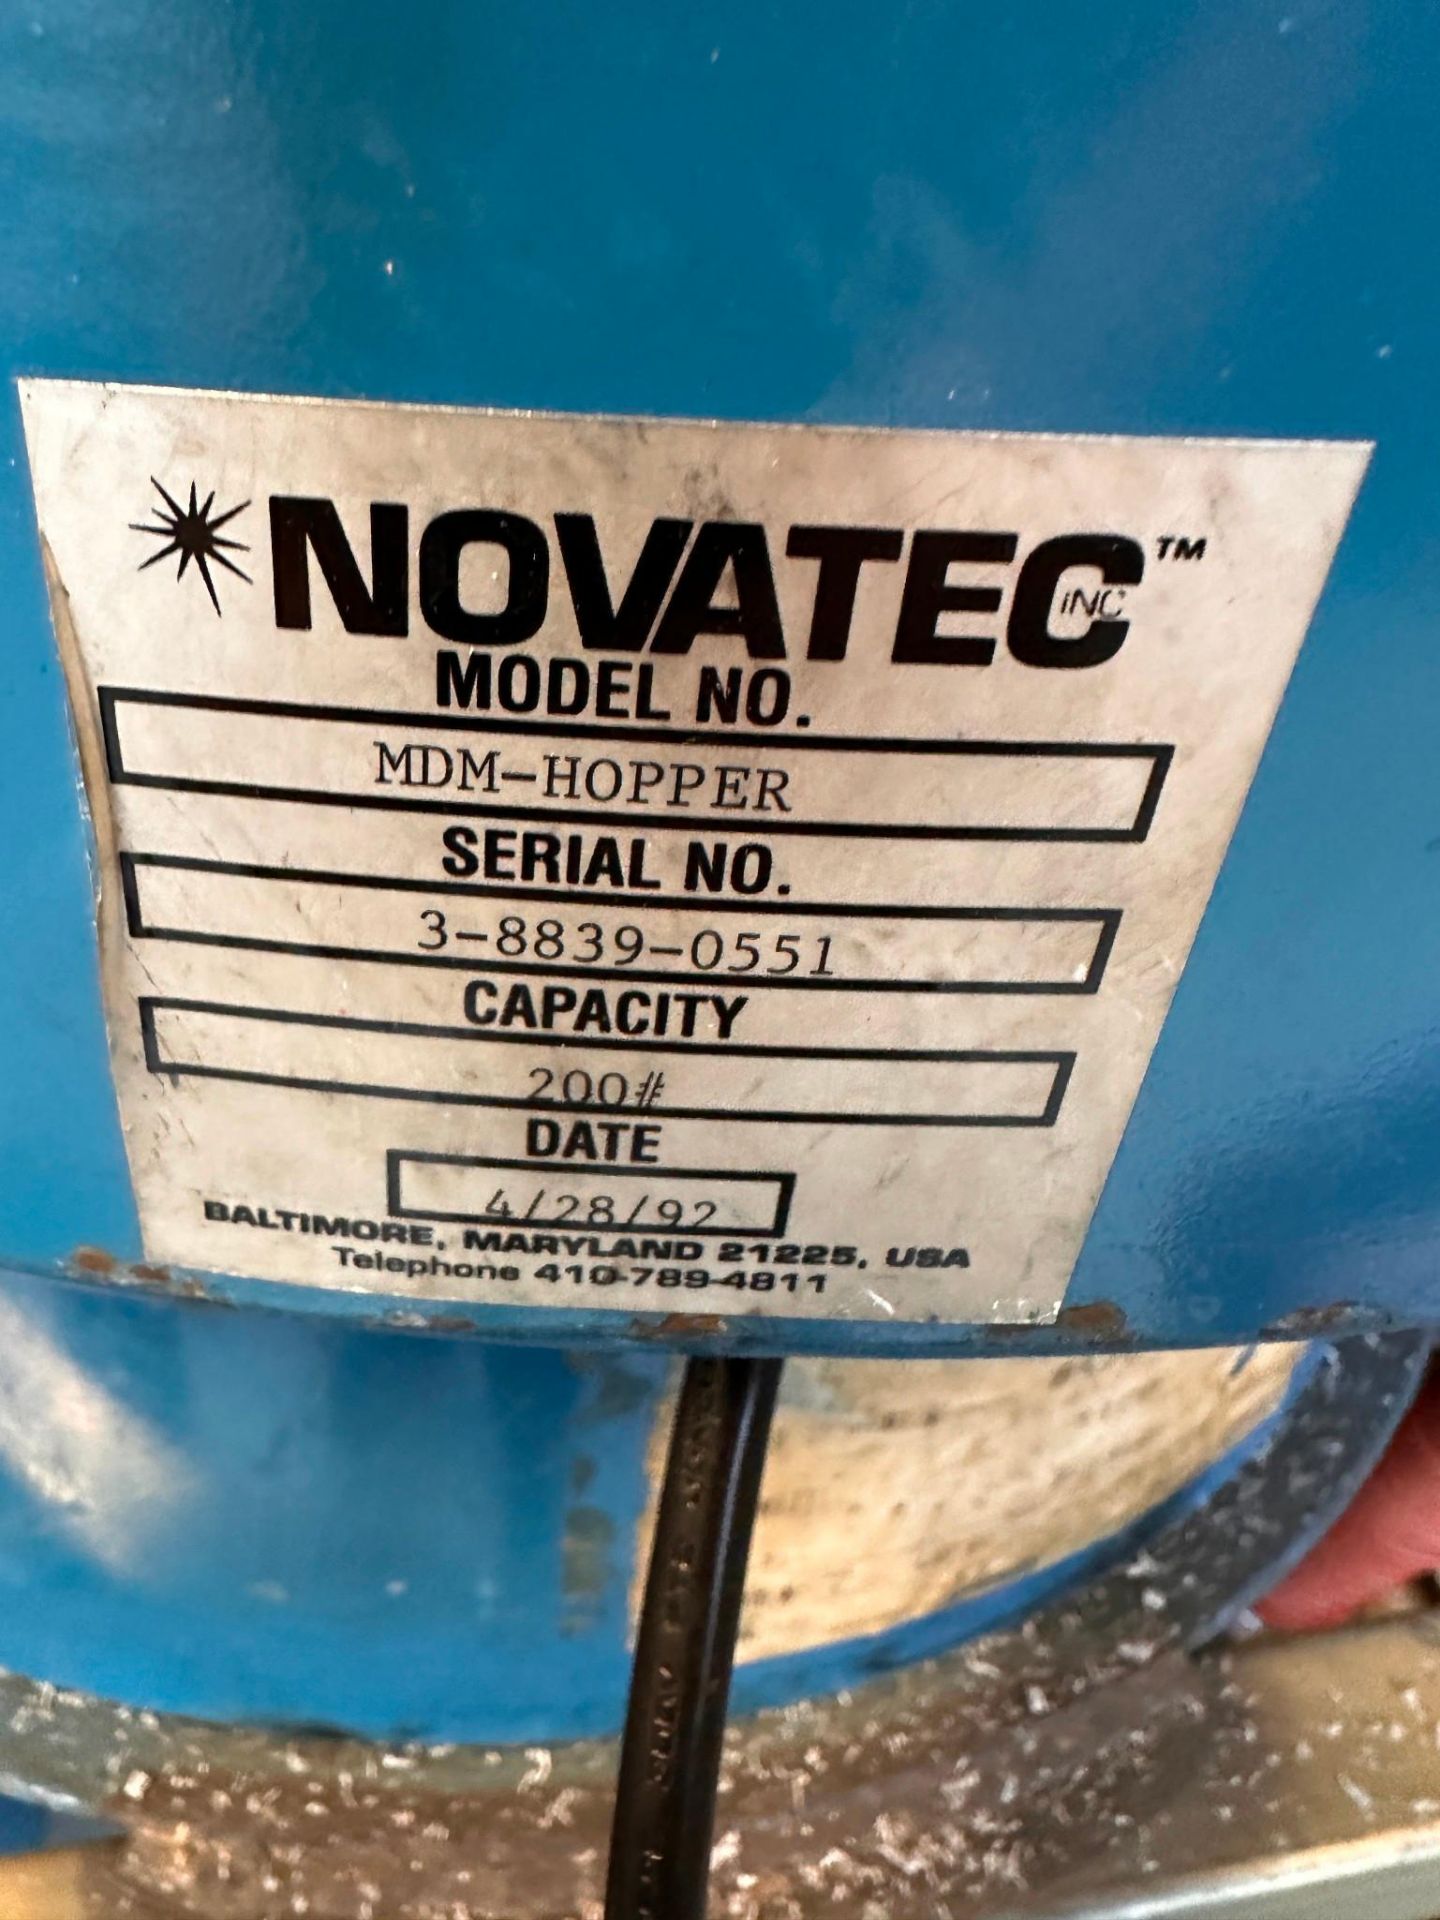 NOVATEC MODEL MOM 200 # CAPACITY INSULATED - Image 4 of 4